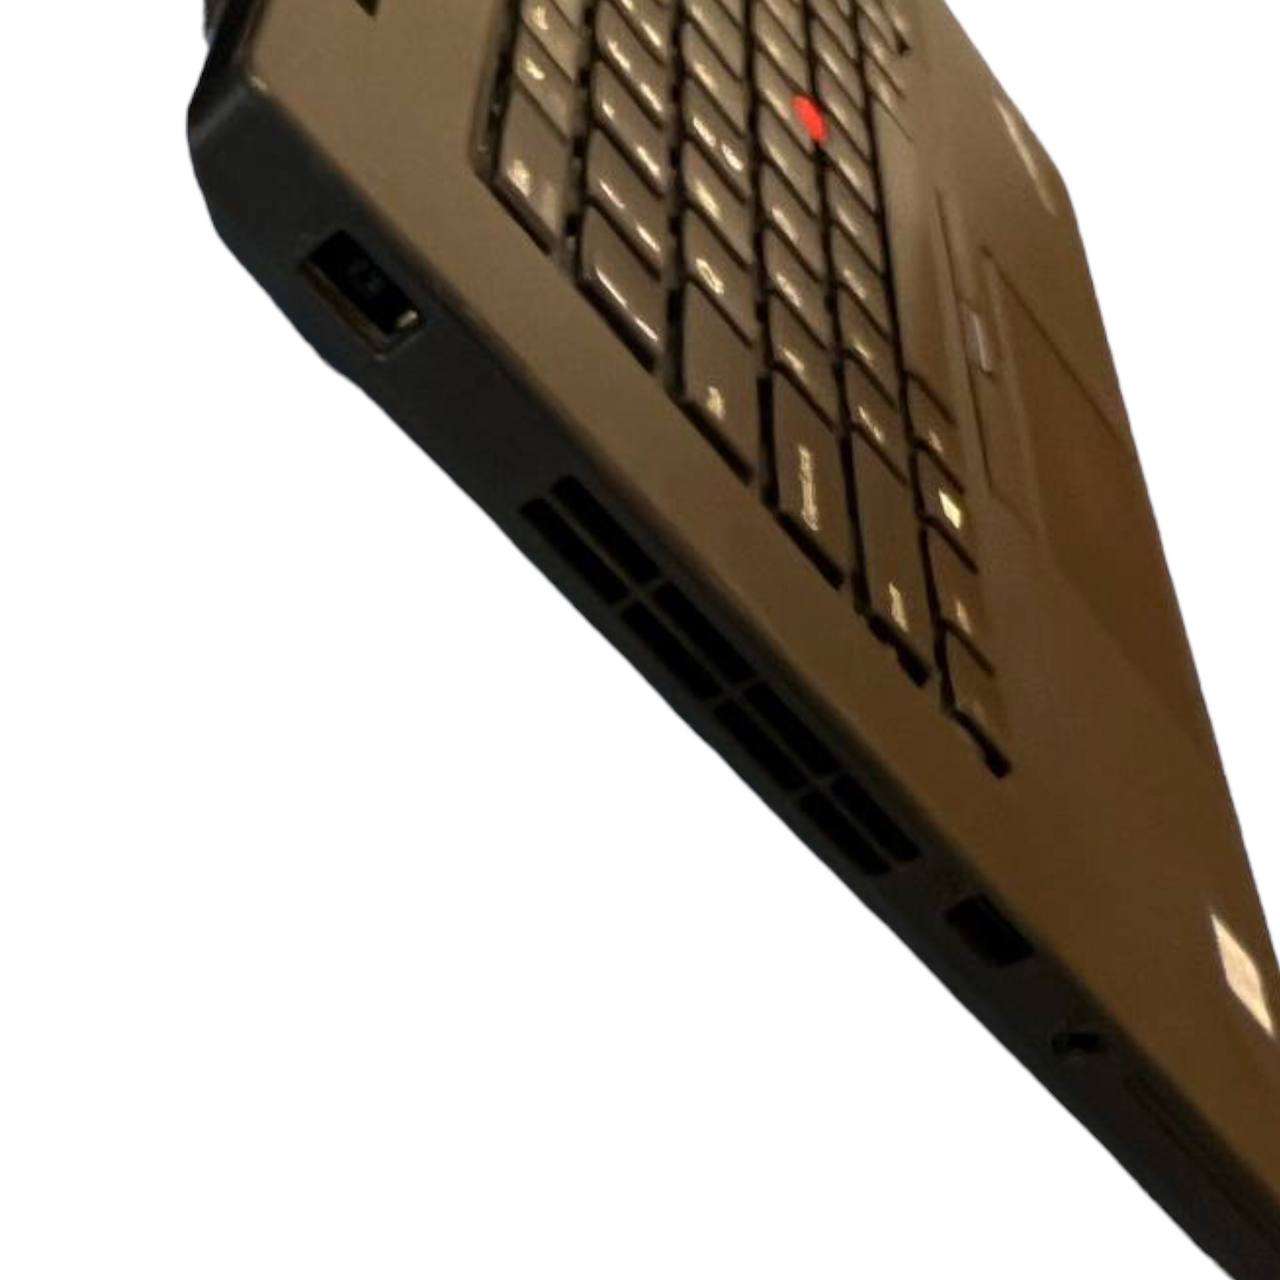 Lenovo Thinkpad L470, Intel Core i5-6300u (2329527G5)